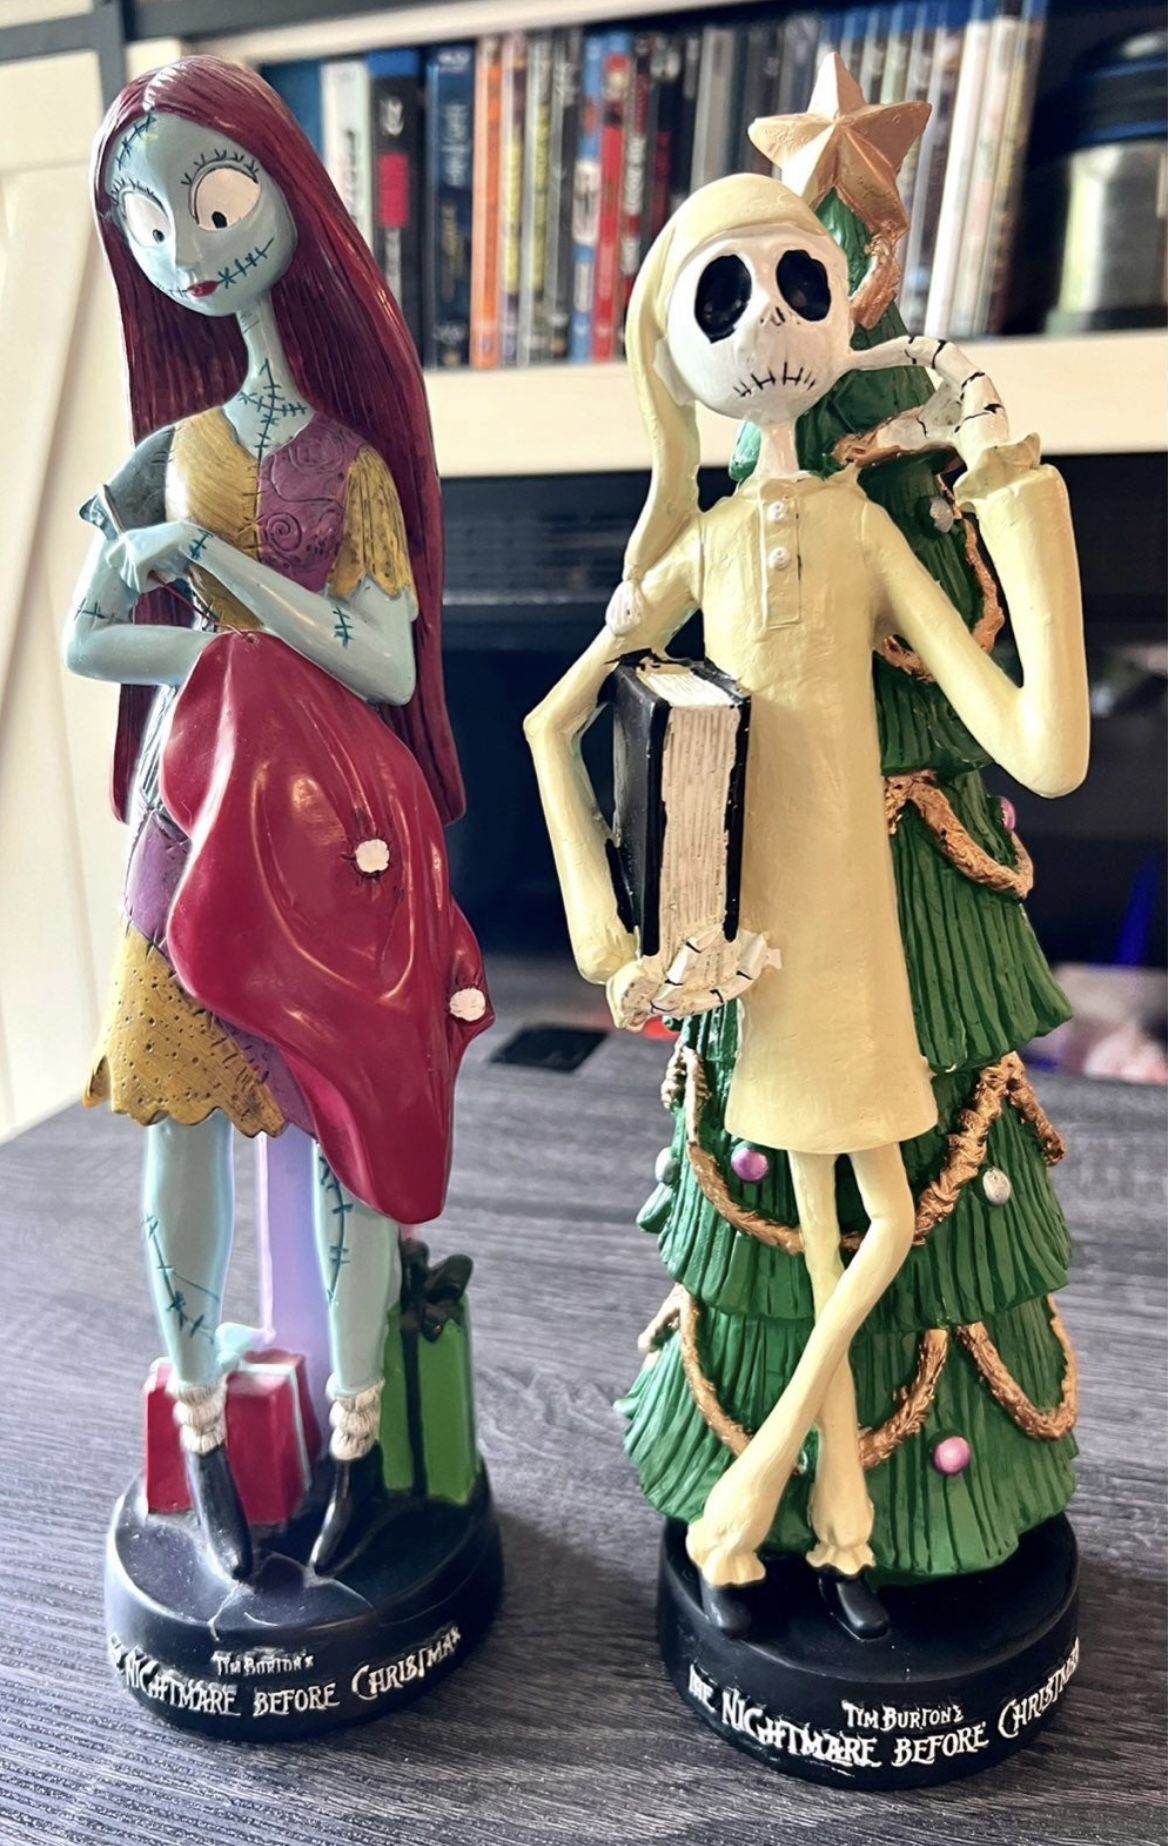 Nightmare Before Christmas Statues/Figures